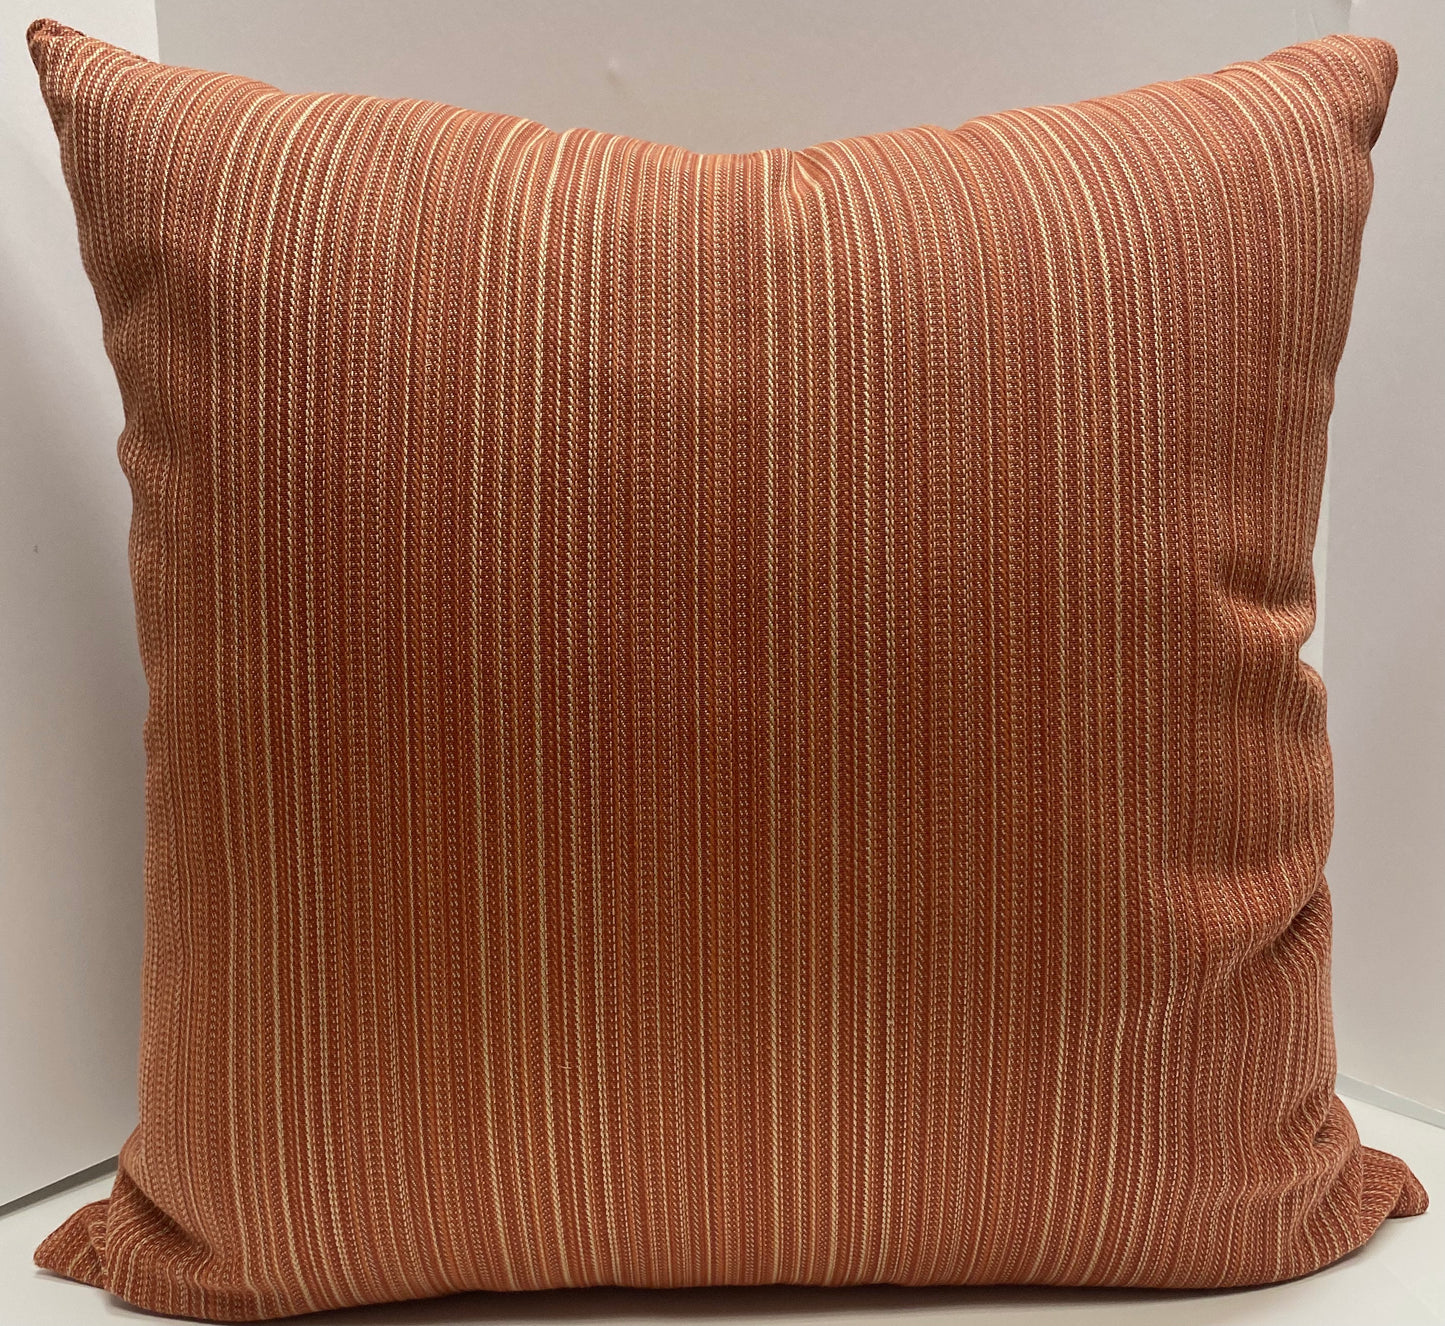 Luxury Outdoor Pillow - 22" x 22" - Jinga-Orange; Sunbrella, or equivalent, fabric with fiber fill